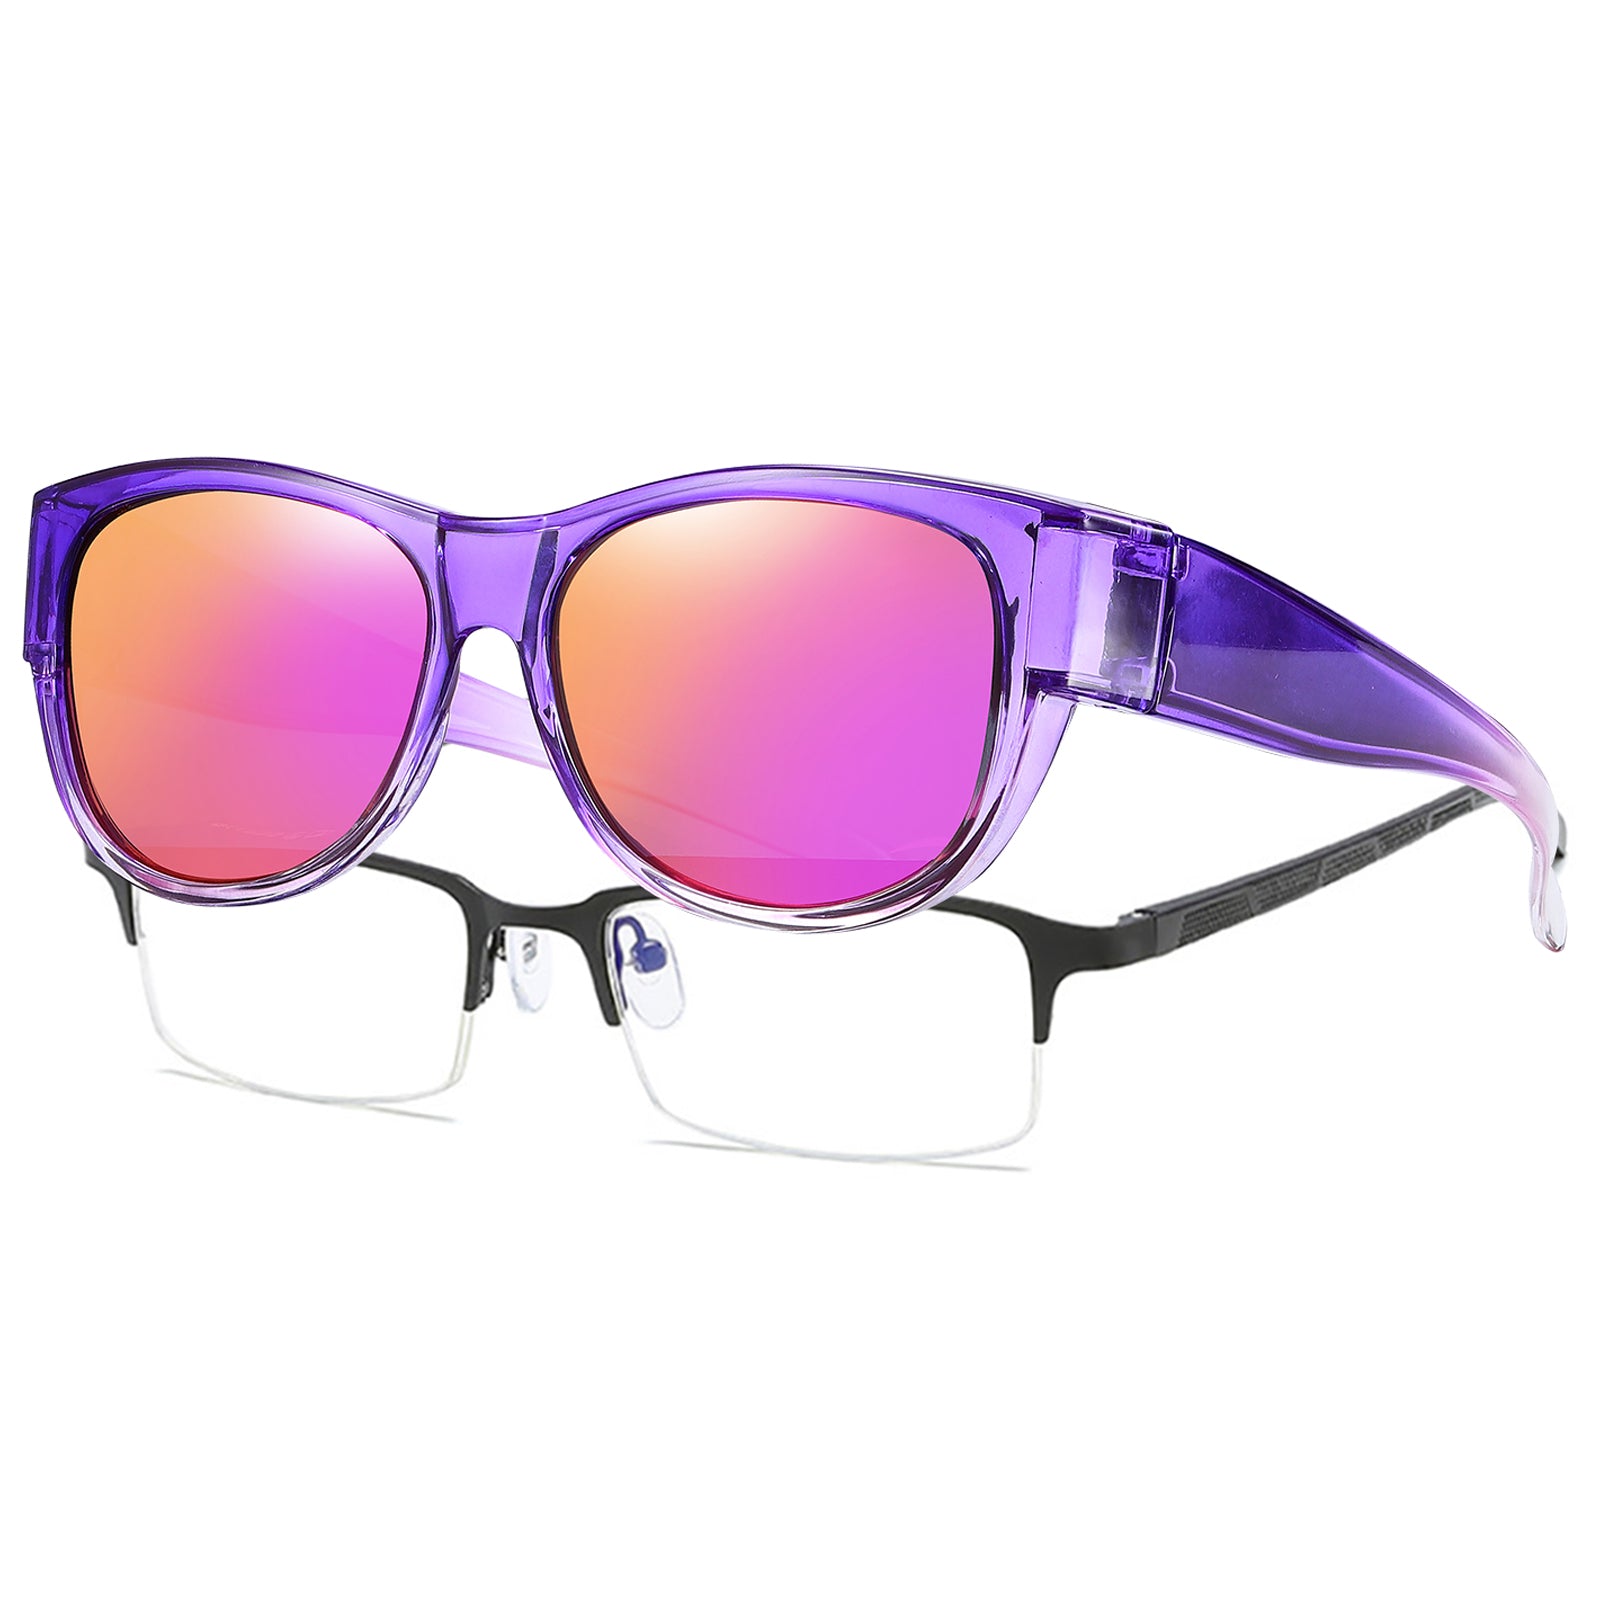 Polarized Fits Over Sunglasses——Prescription Glasses Good Partner – Sheen  Kelly Vision